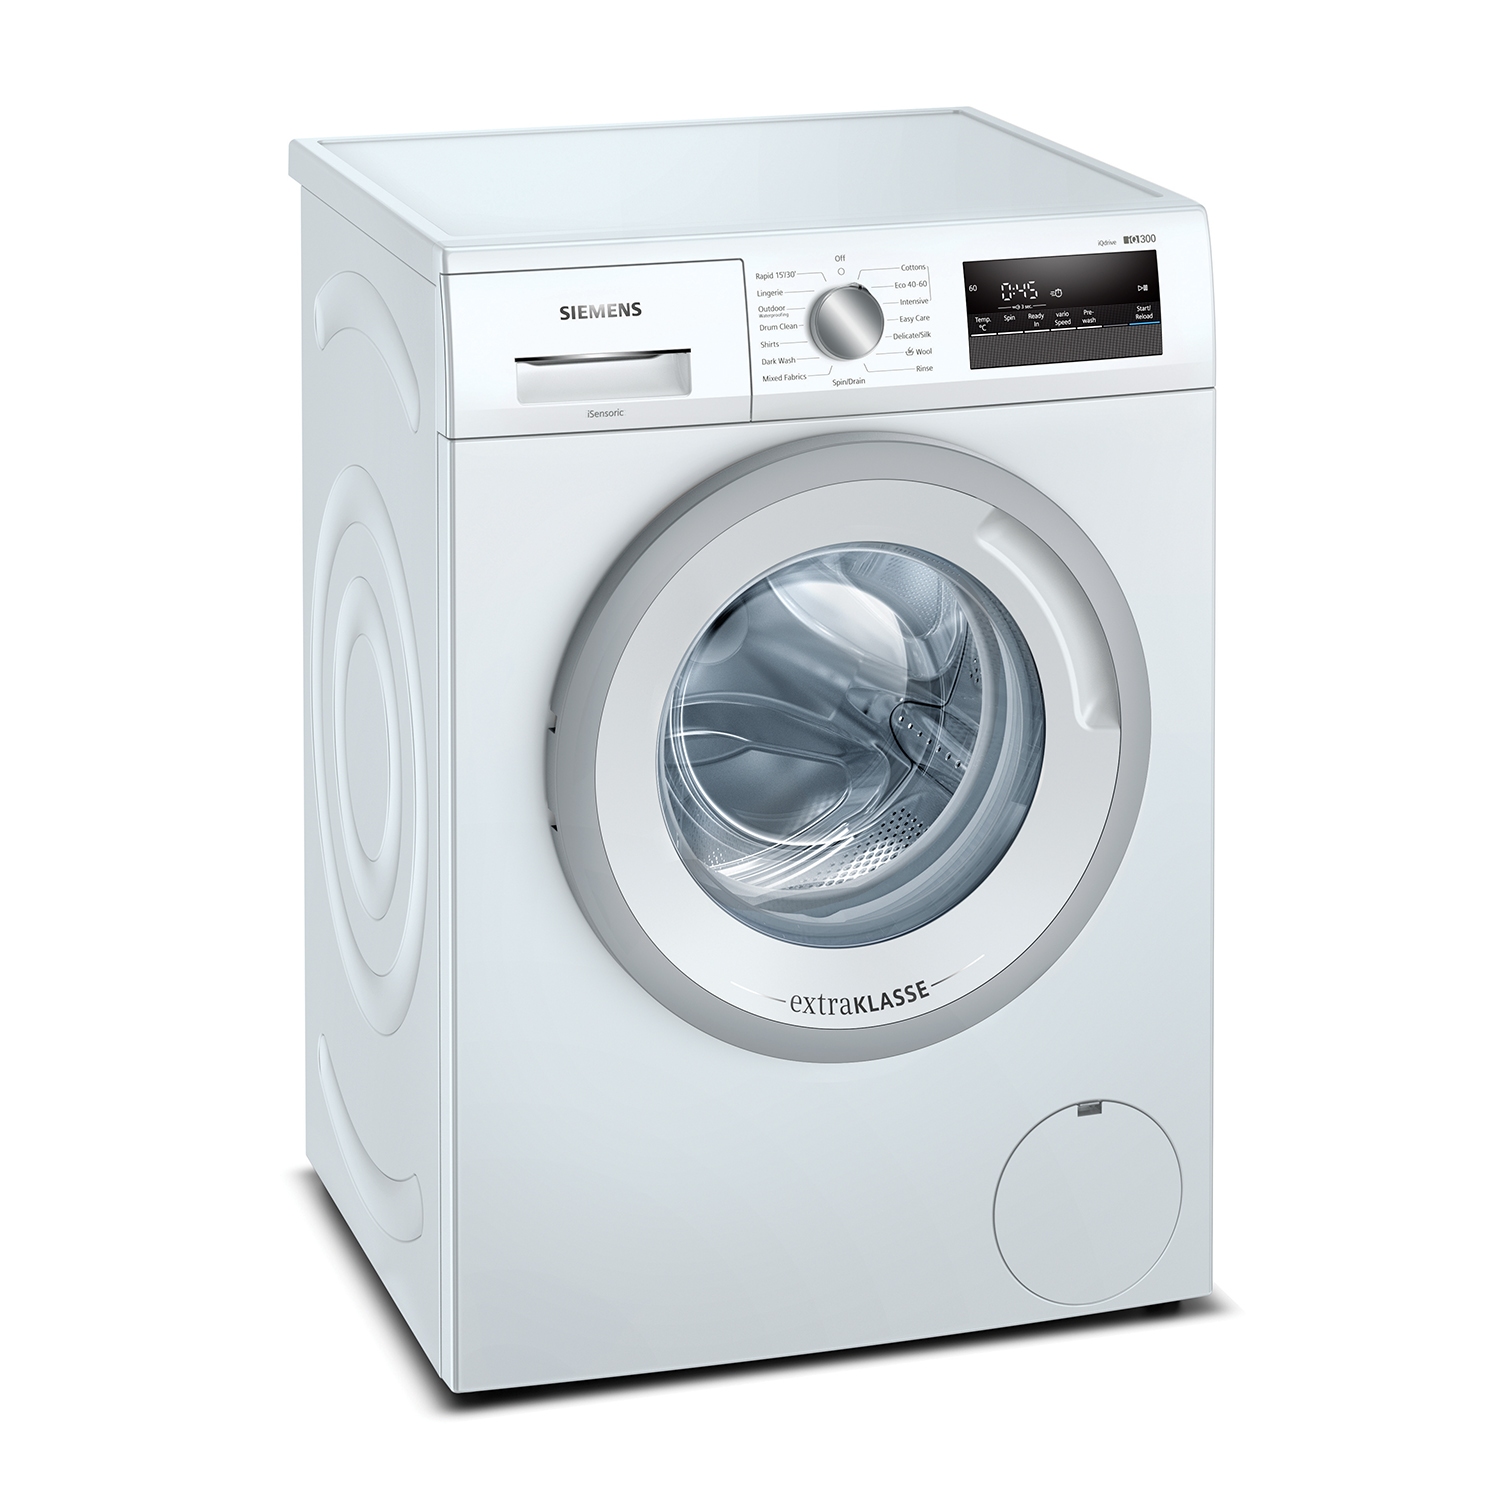 Siemens extraKlasse WM14N191GB 7kg 1400 Spin Washing Machine with iQdrive - White - 0